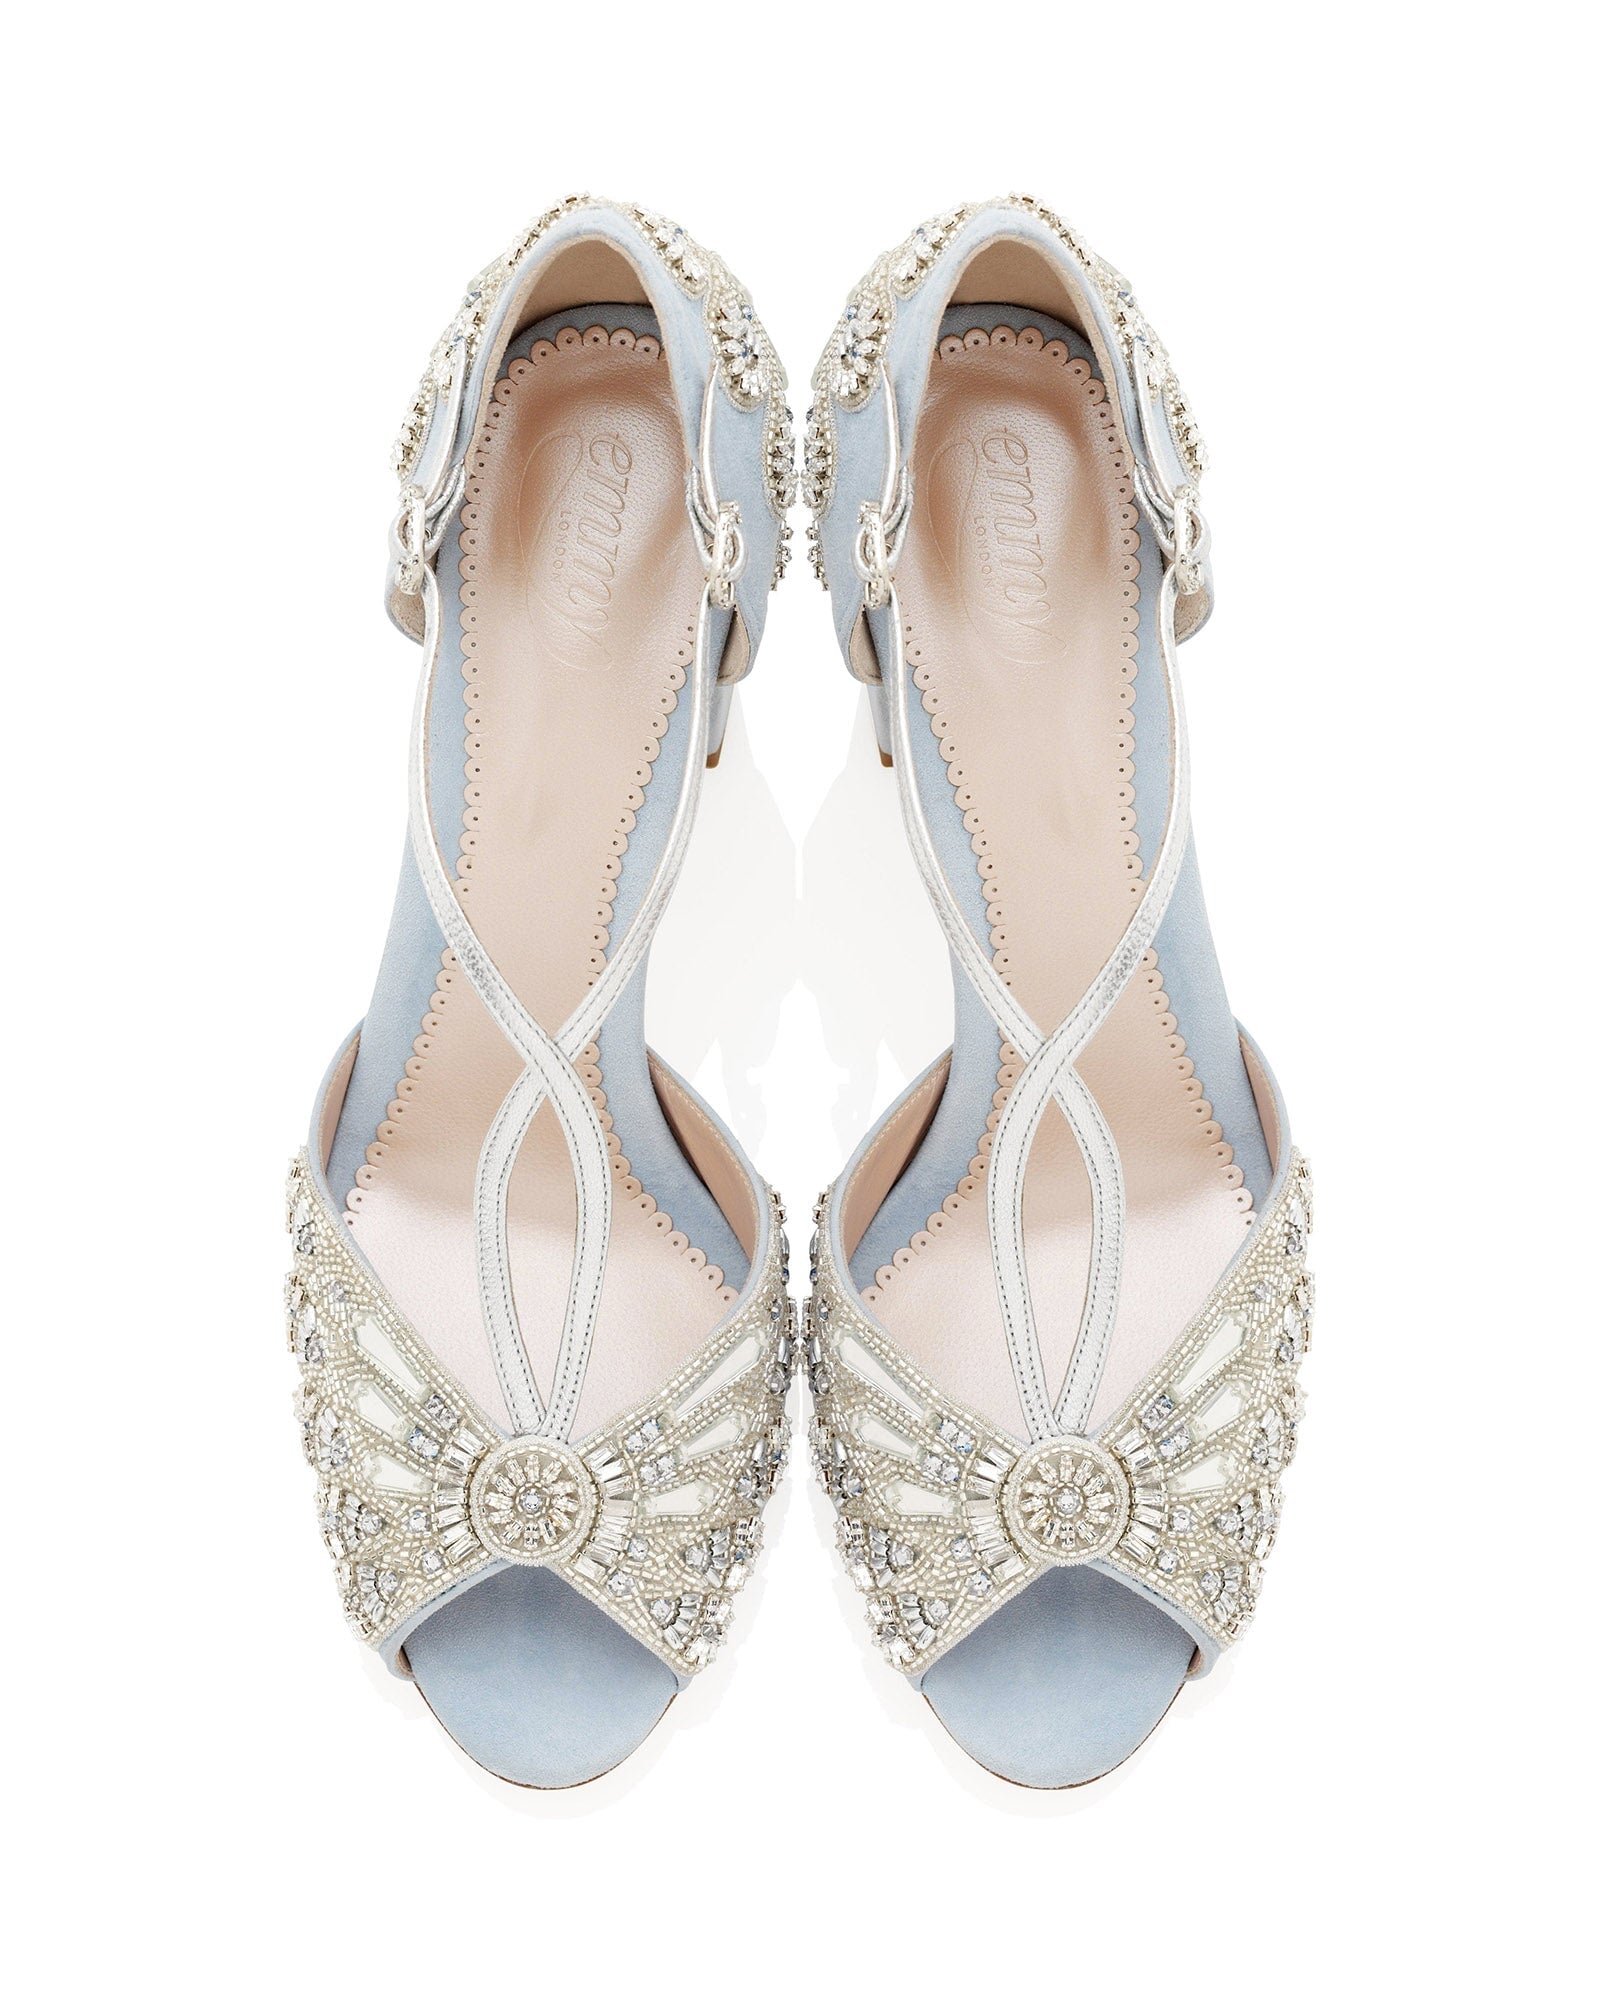 Blue Bridal Shoes Block Heel - Shop on Pinterest